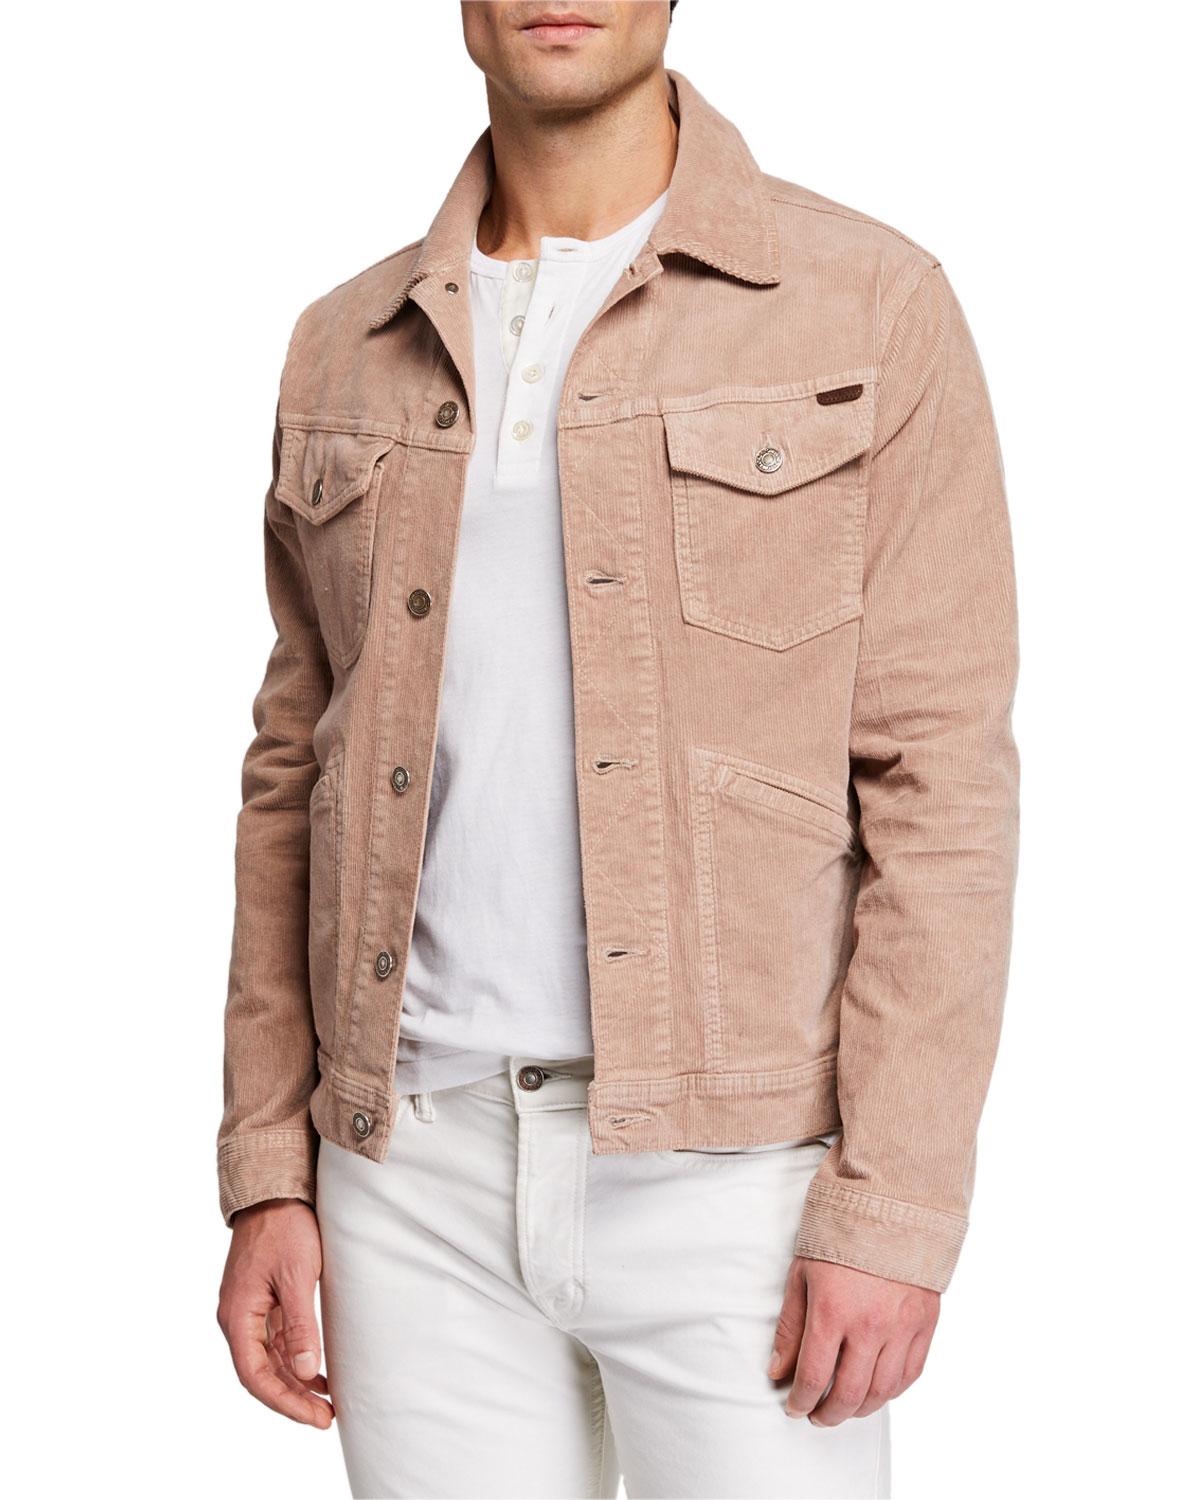 corduroy jean jacket mens